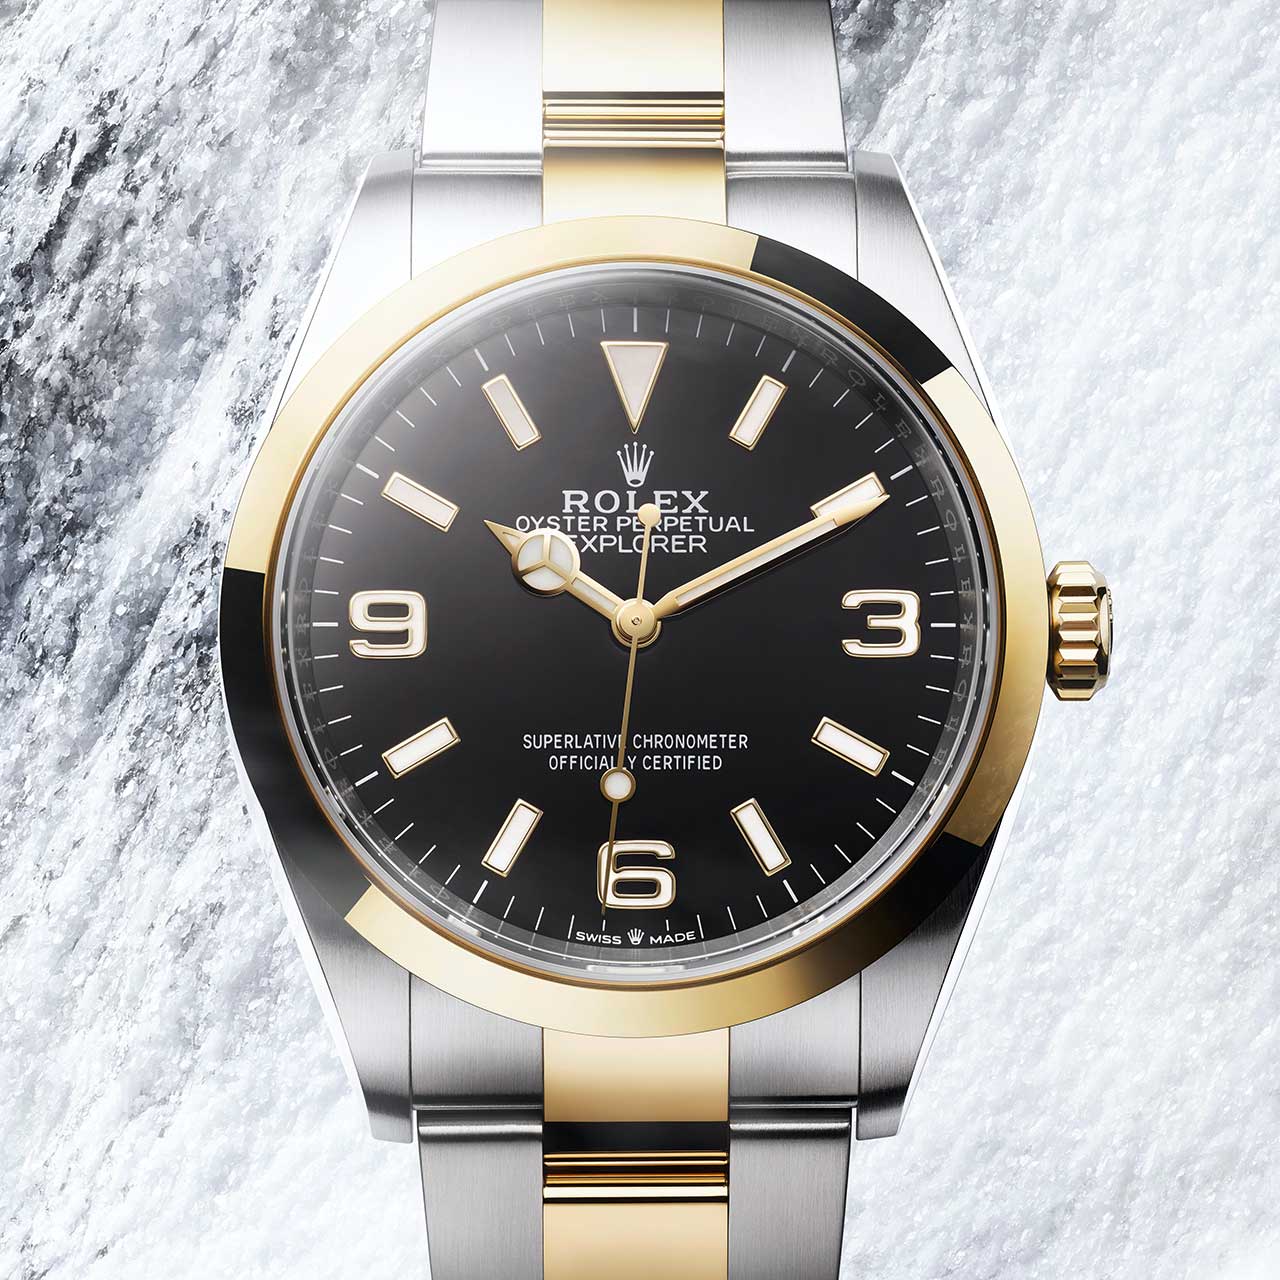 Replica Rolex Explorer Watches